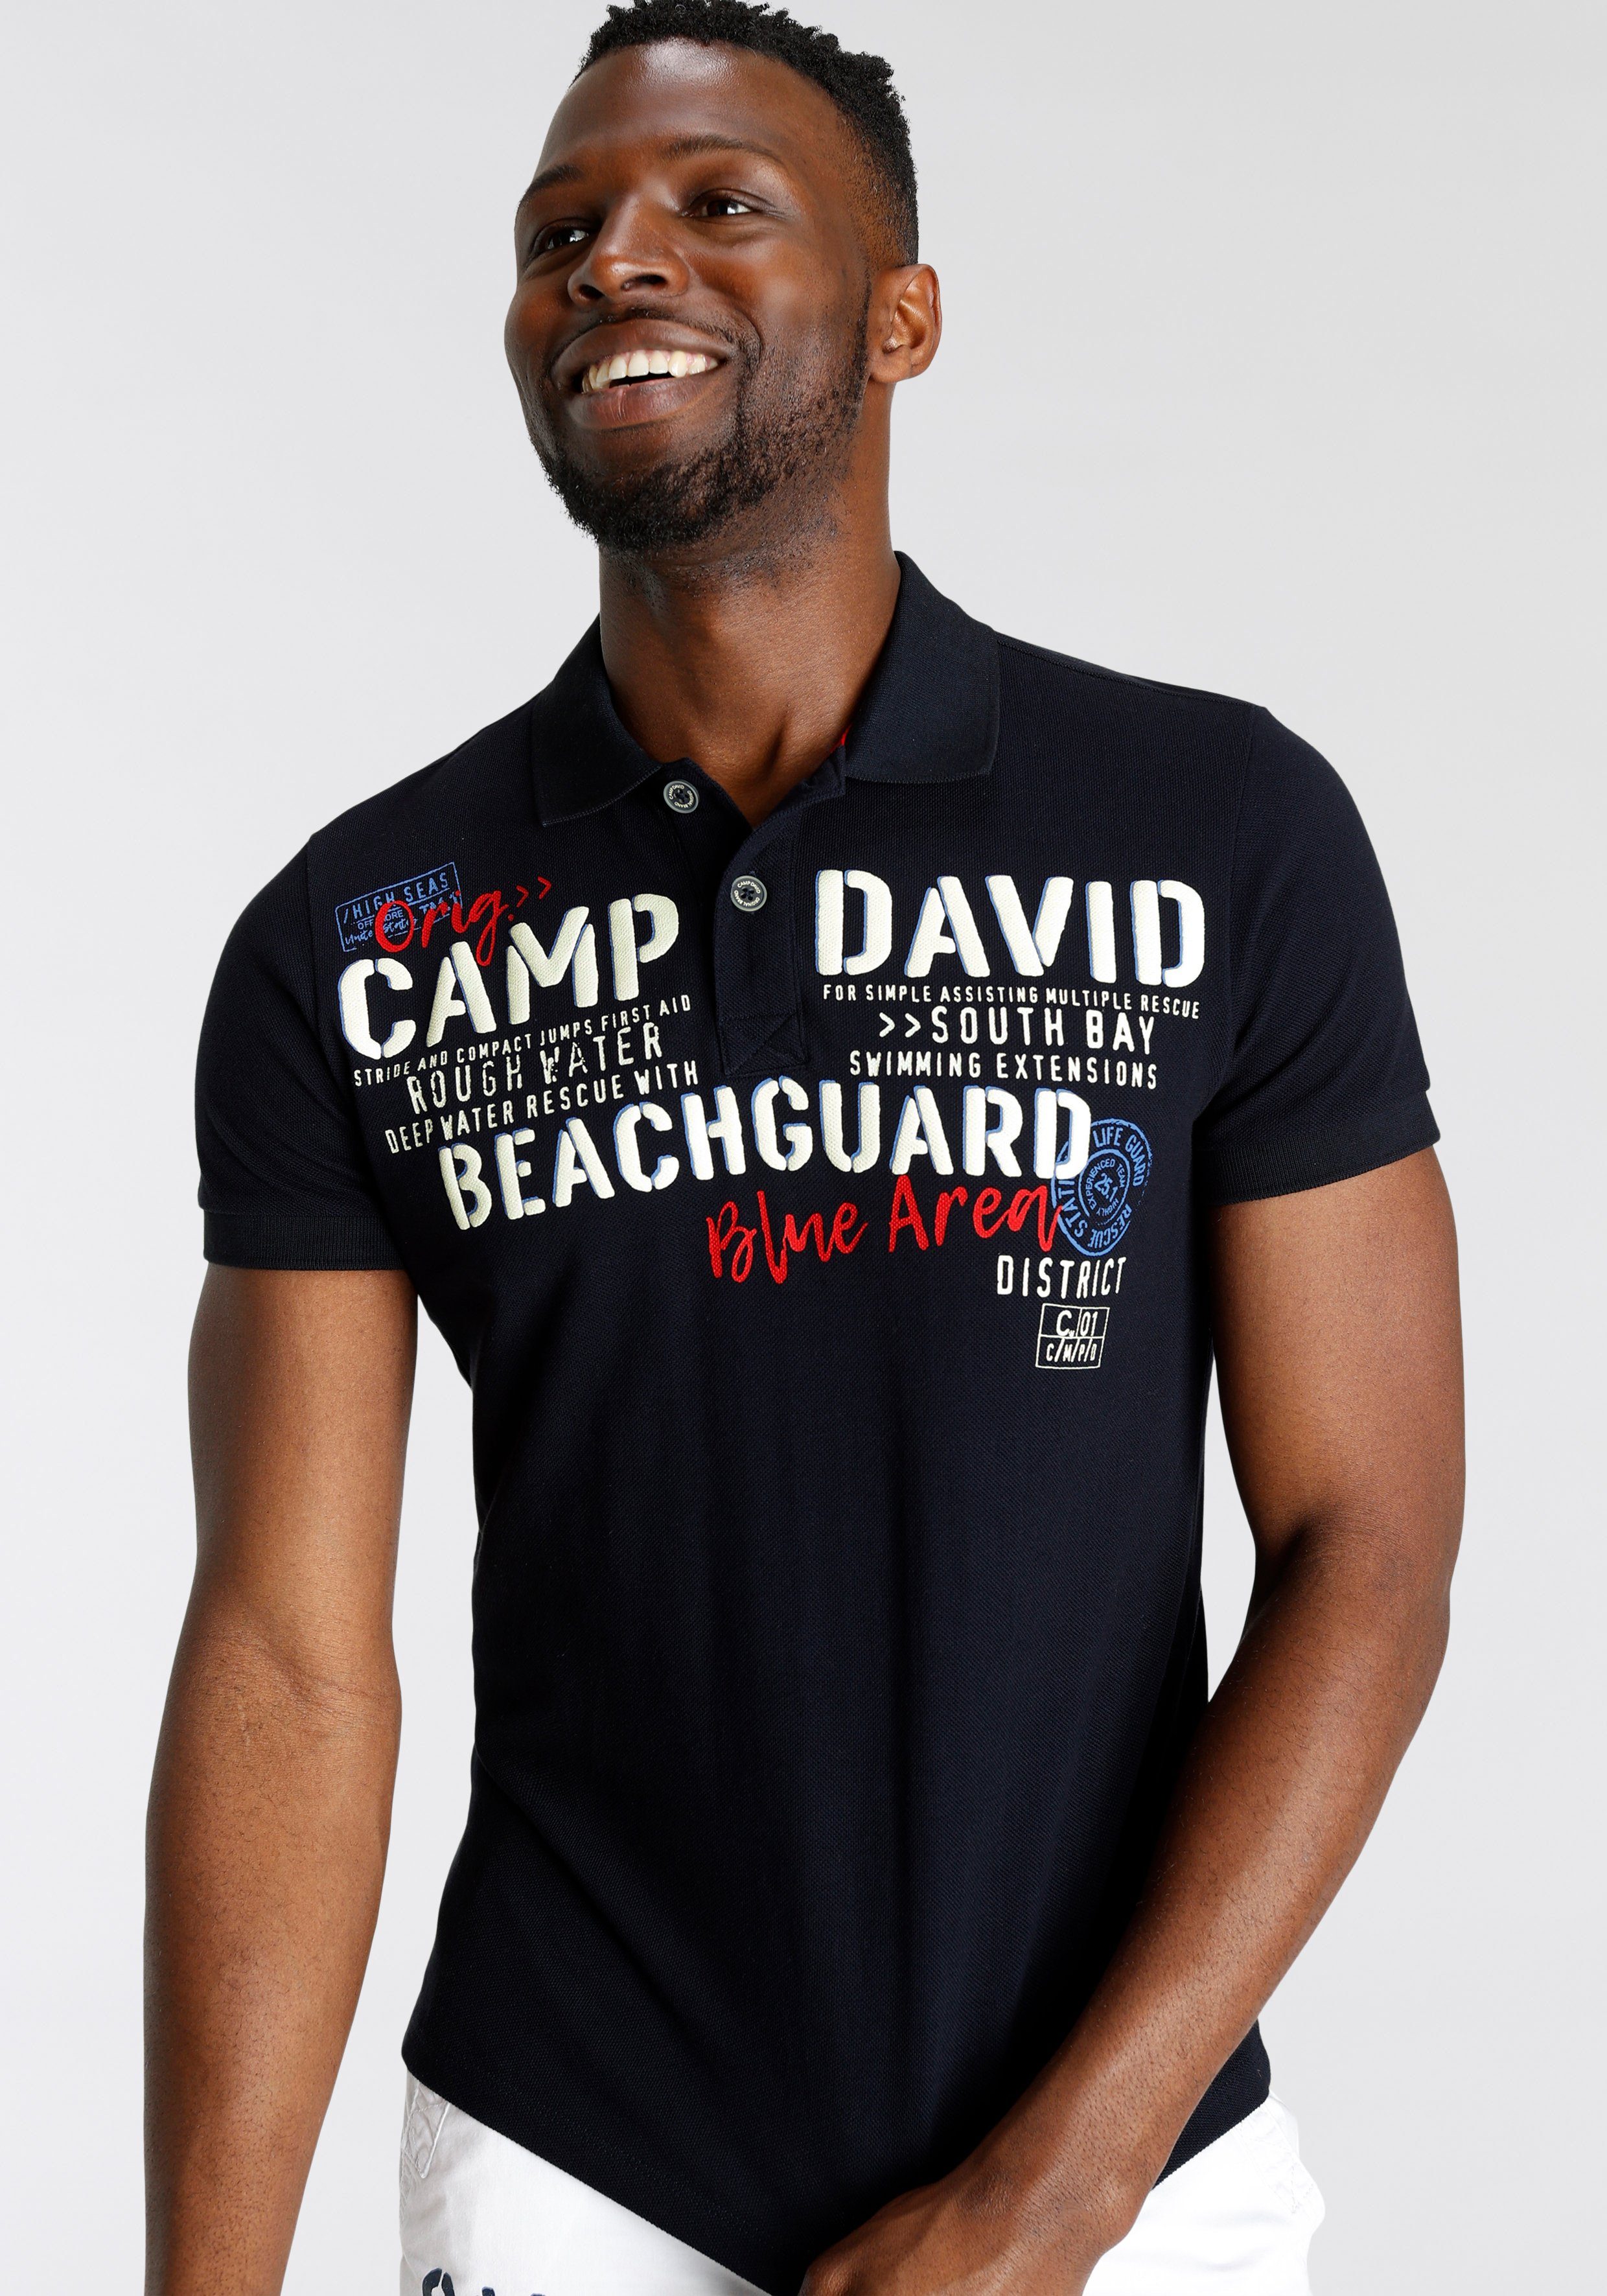 CAMP DAVID Poloshirt in hochwertiger Piqué-Qualität